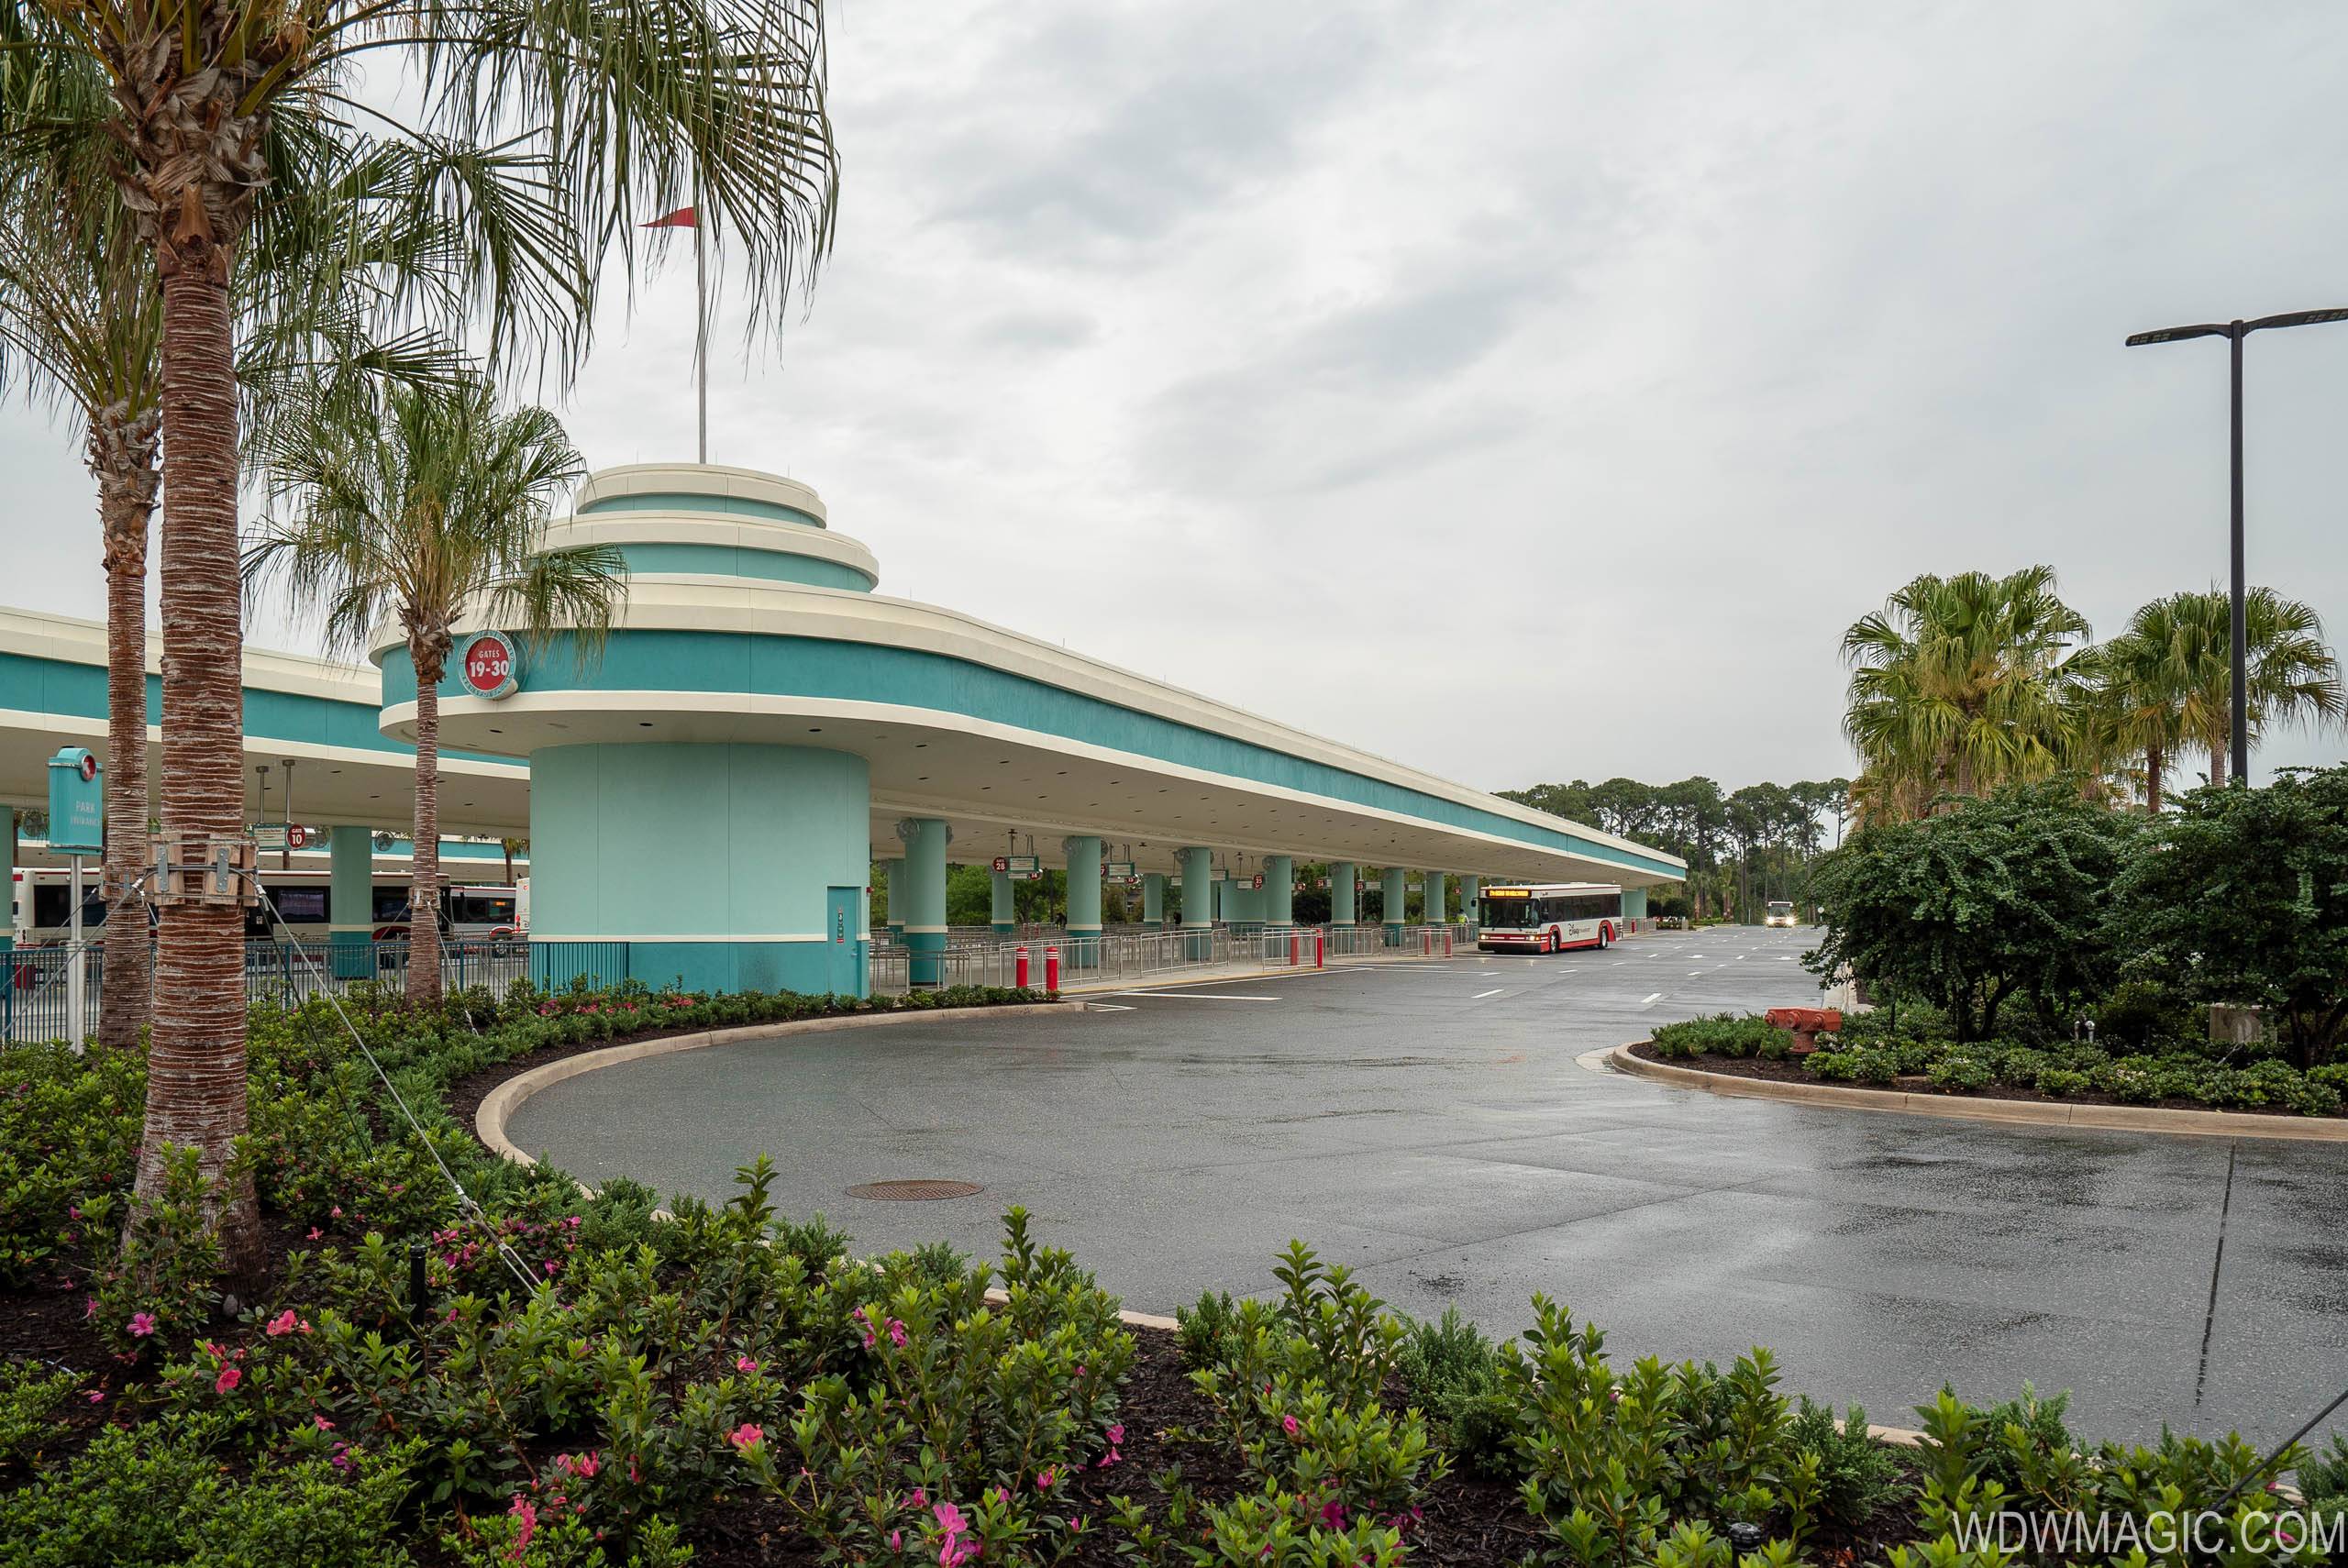 PHOTOS - New resort bus loops open at Disney's Hollywood Studios